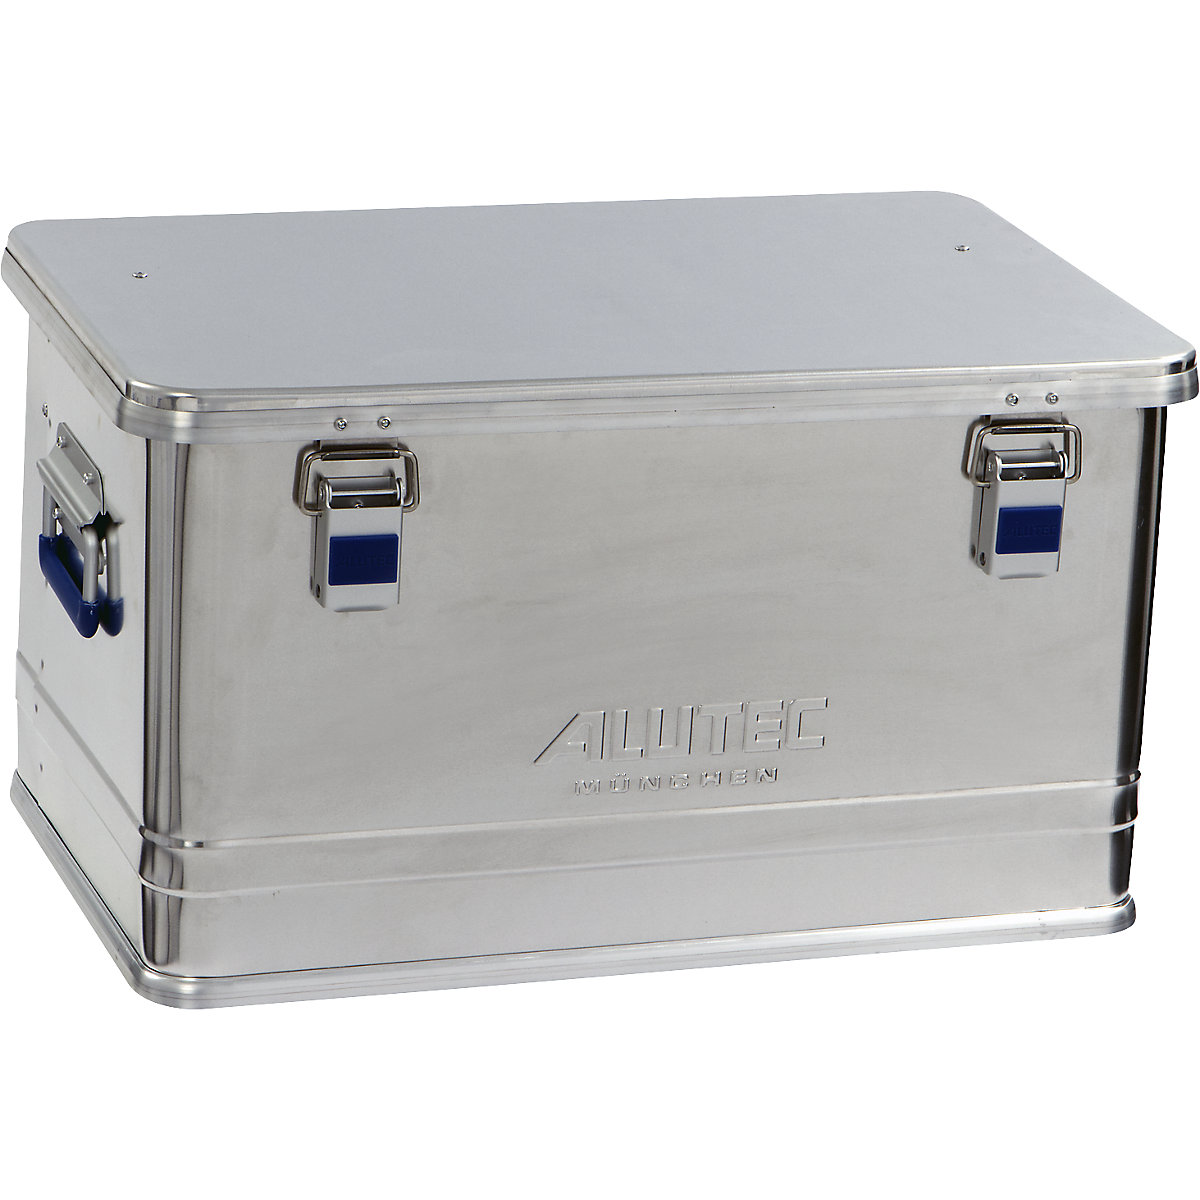 COMFORT aluminium box